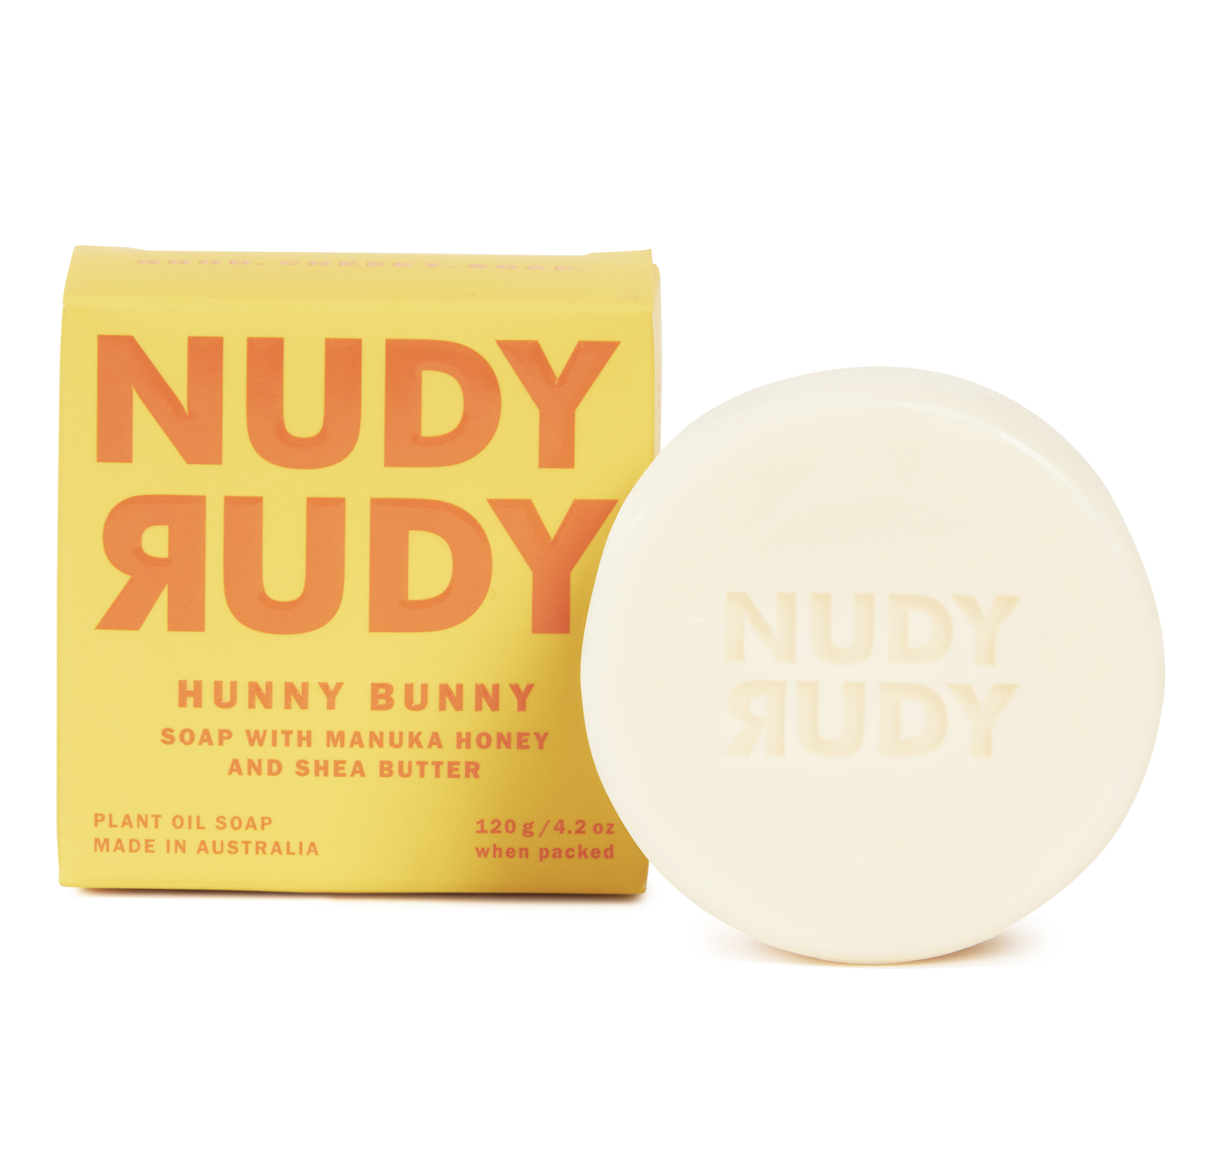 Hunny Bunny Bar Soap Puck